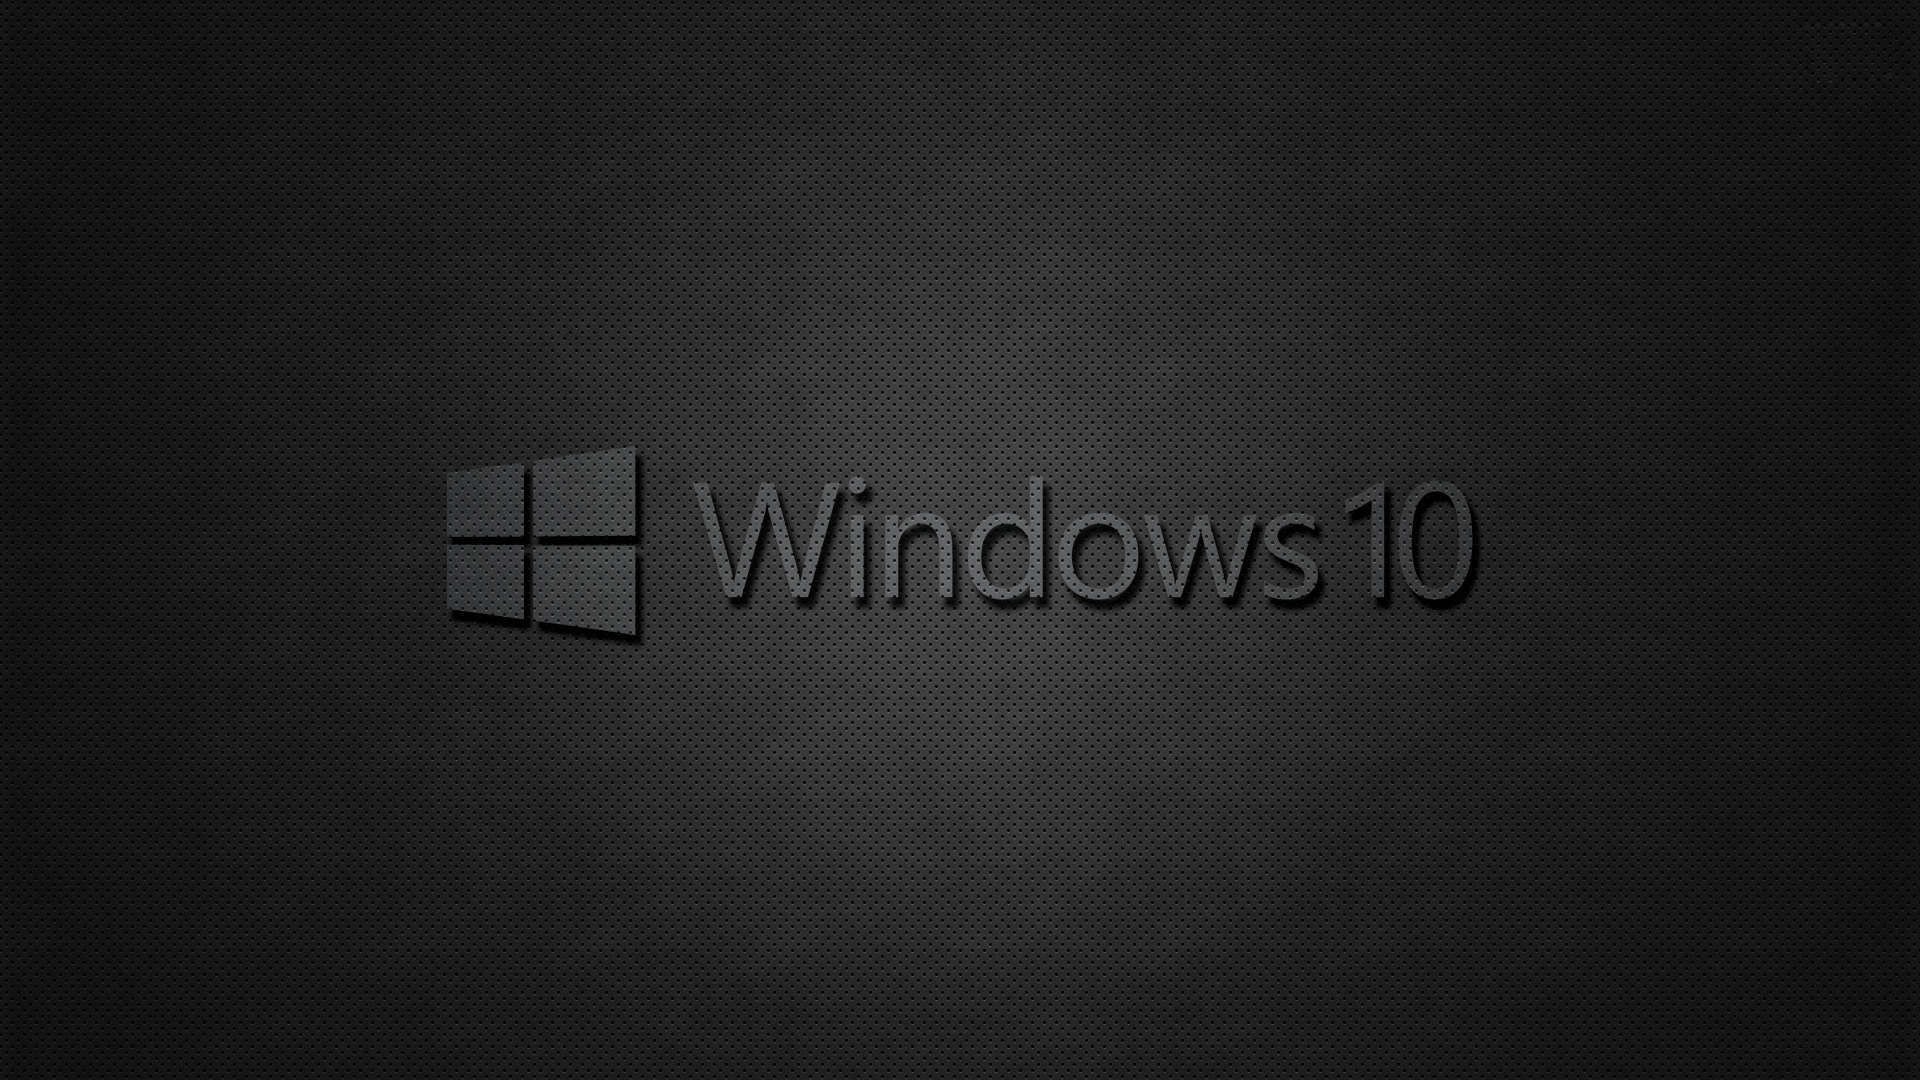 Windows 10 Black HD Wallpaper 1080p. kp. Windows 10